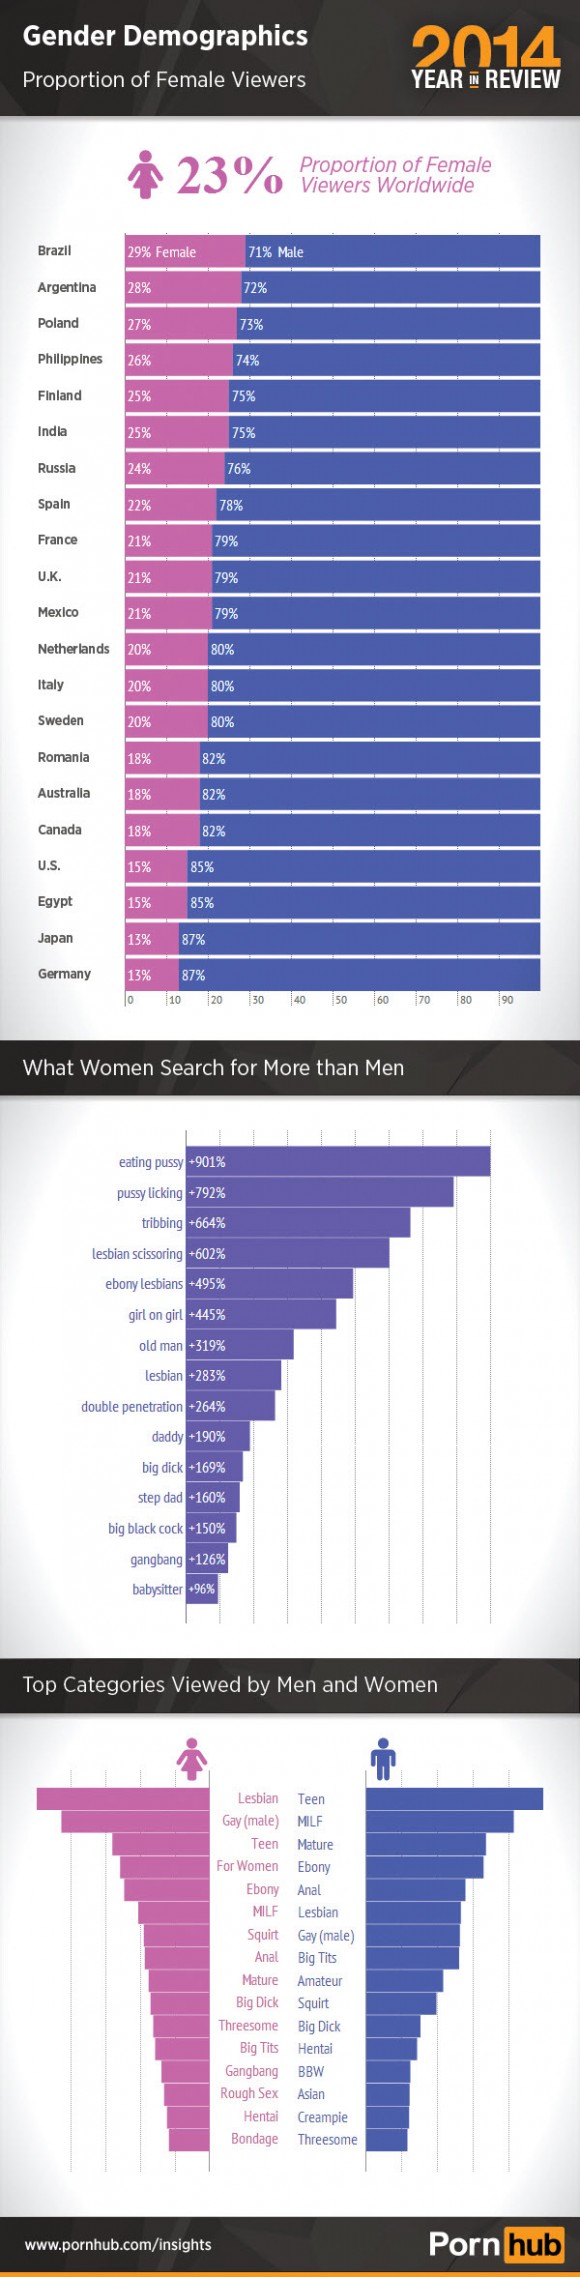 2-pornhub-2014-gender-demographics